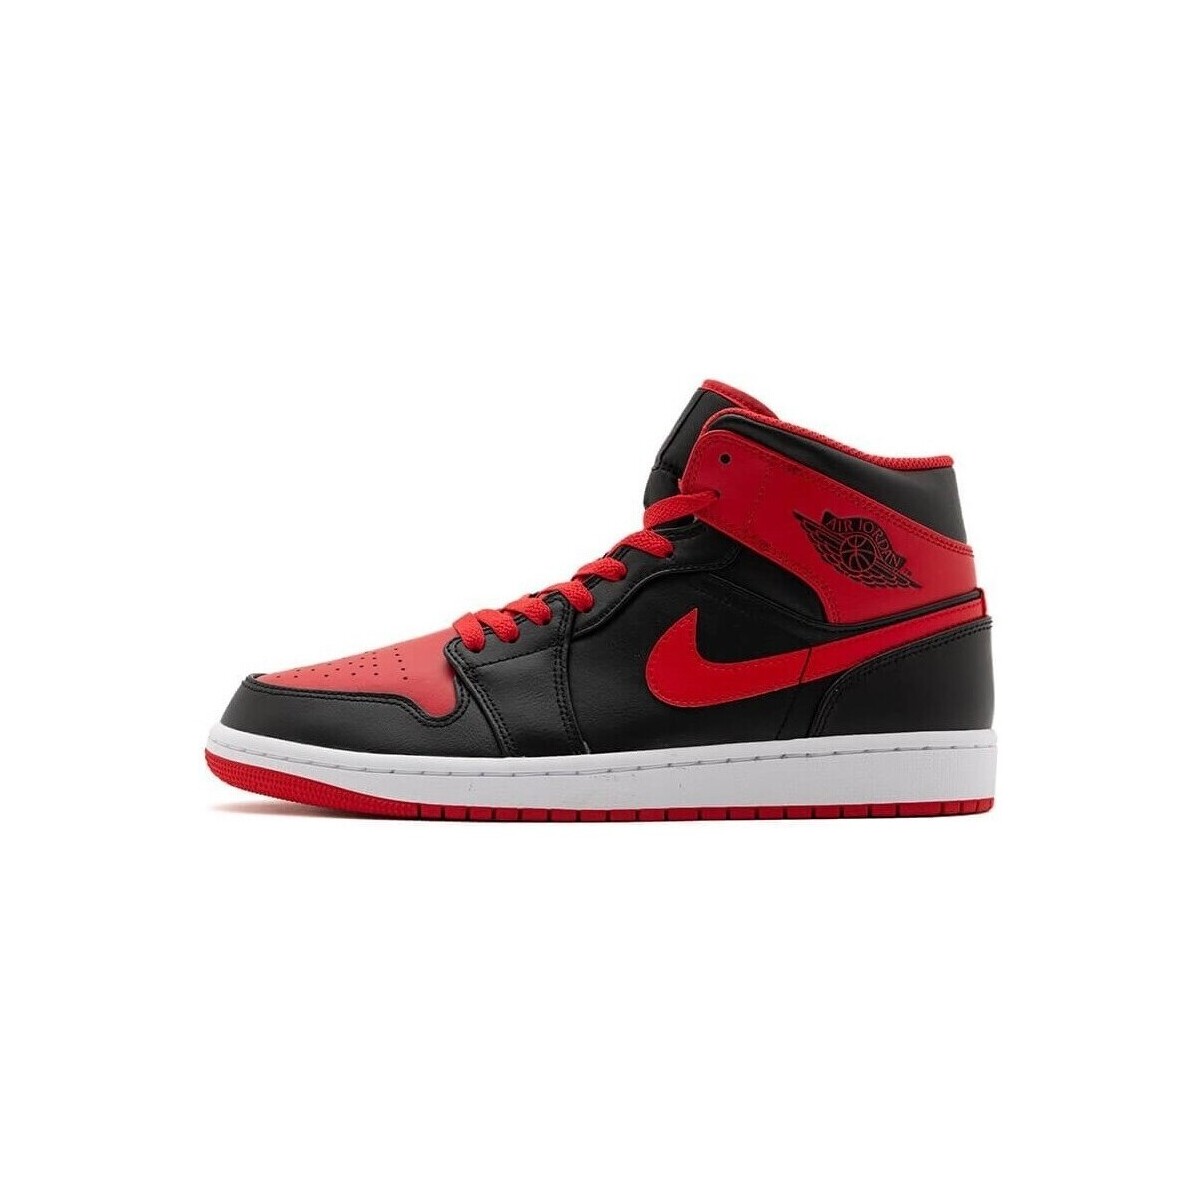 Nike Air Jordan 1 Mid Black